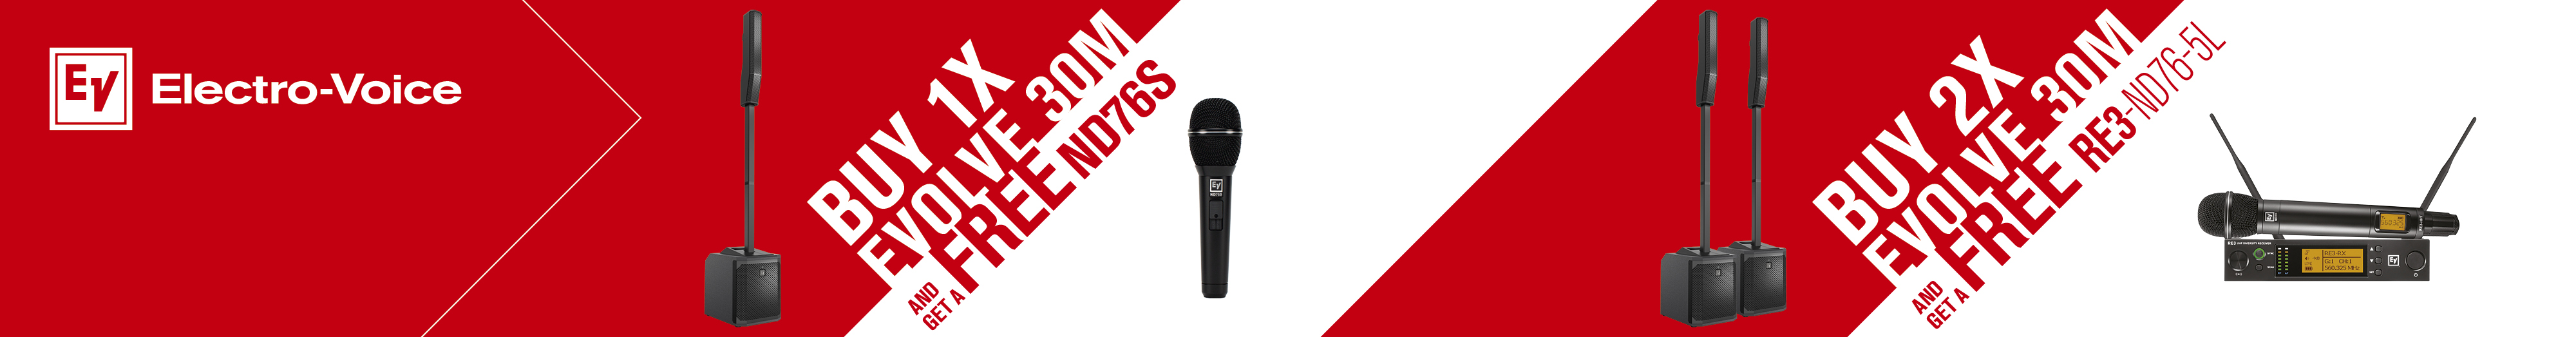 Electro-Voice EVOLVE 30M mic back promotion